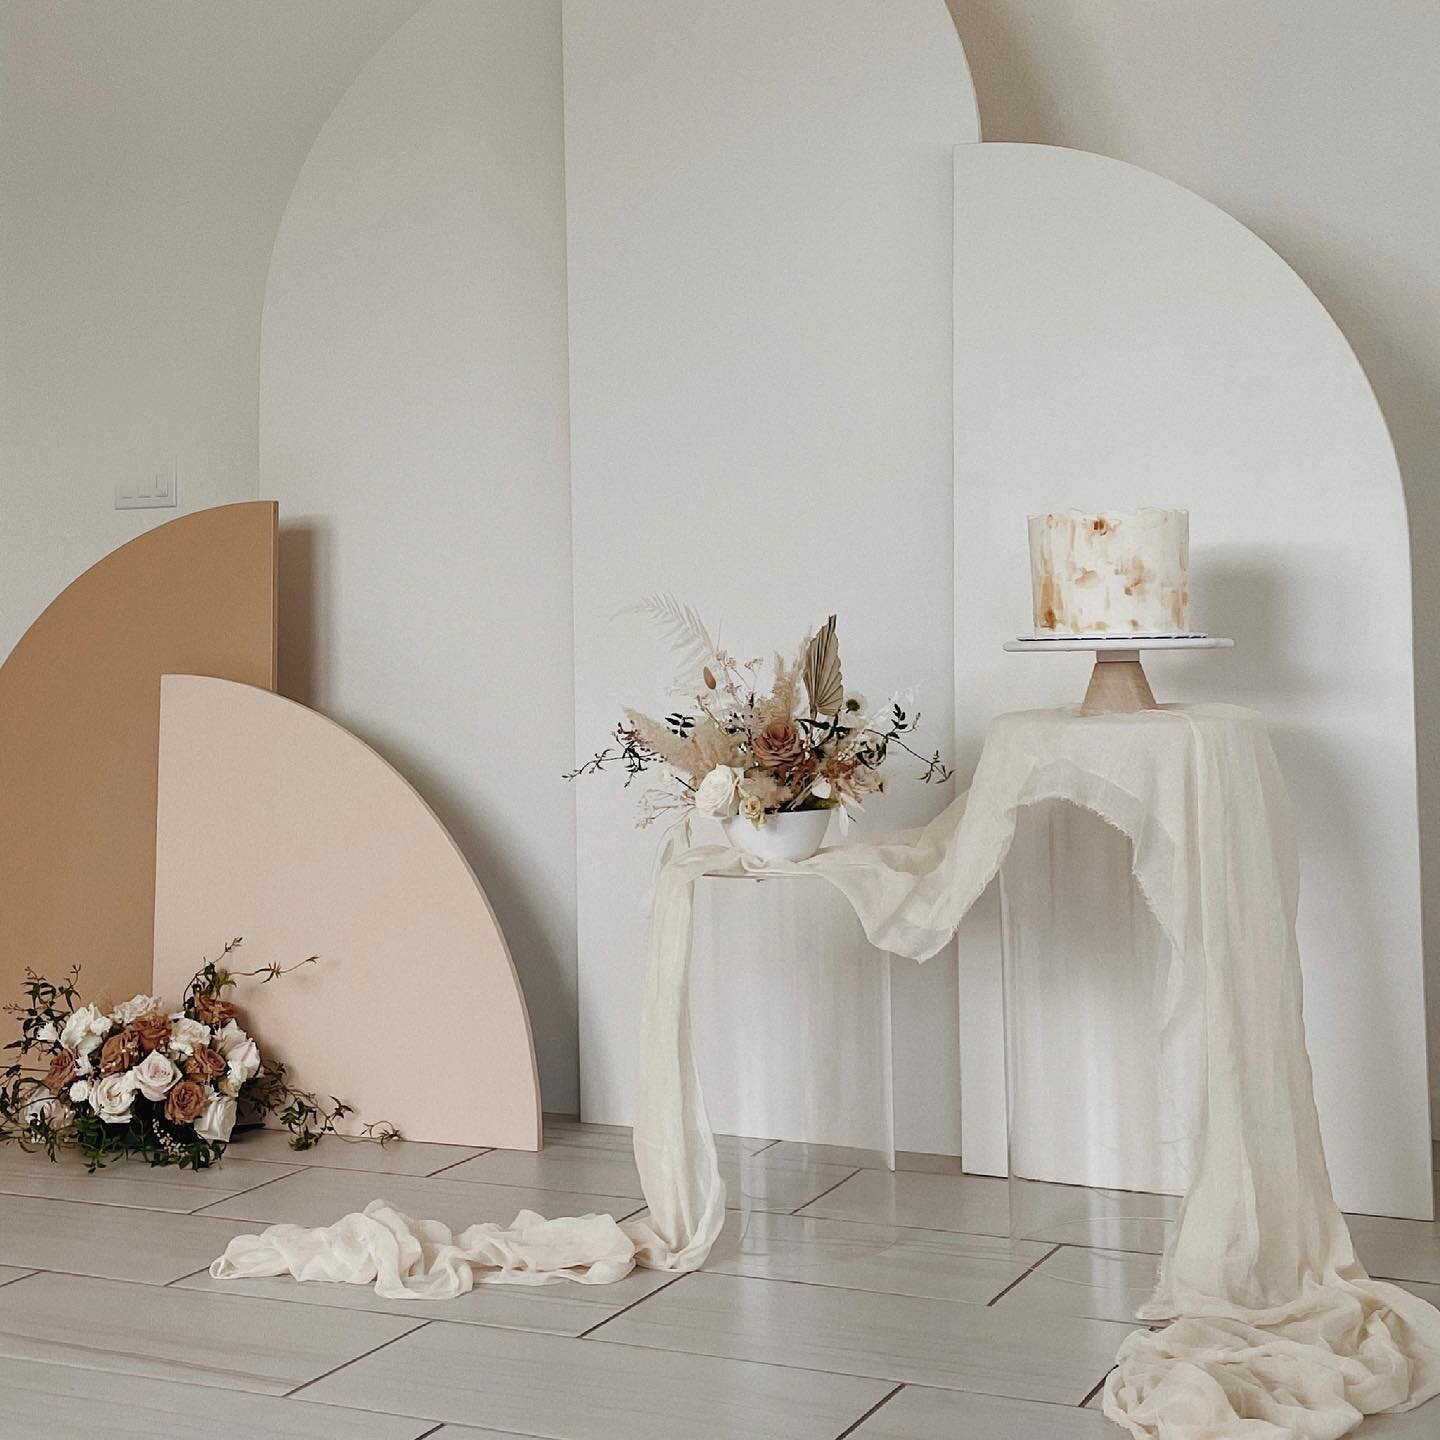 These acrylic cylinders work as lovely cake table 🍰 #memorableeventsrentals 
.
Baby shower for the lovely @innapavliy 
.
.
.

.
.
#caketabledecor #babyshower #decor #design #weddingcake #sacramento #decorideas #weddinginspo #bridalshower #party #par